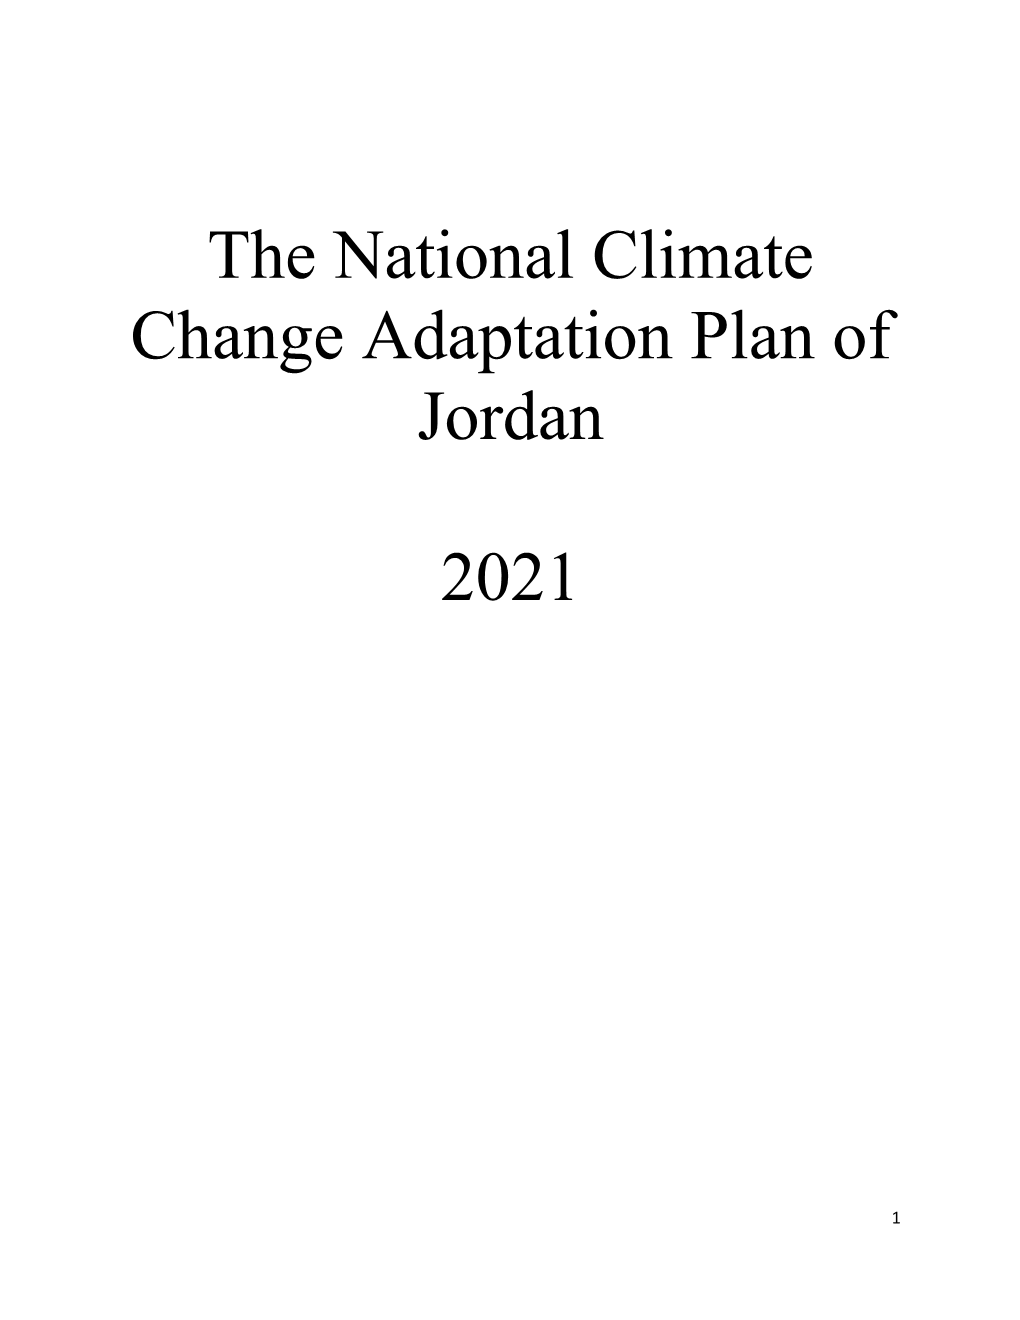 The National Climate Change Adaptation Plan of Jordan 2021